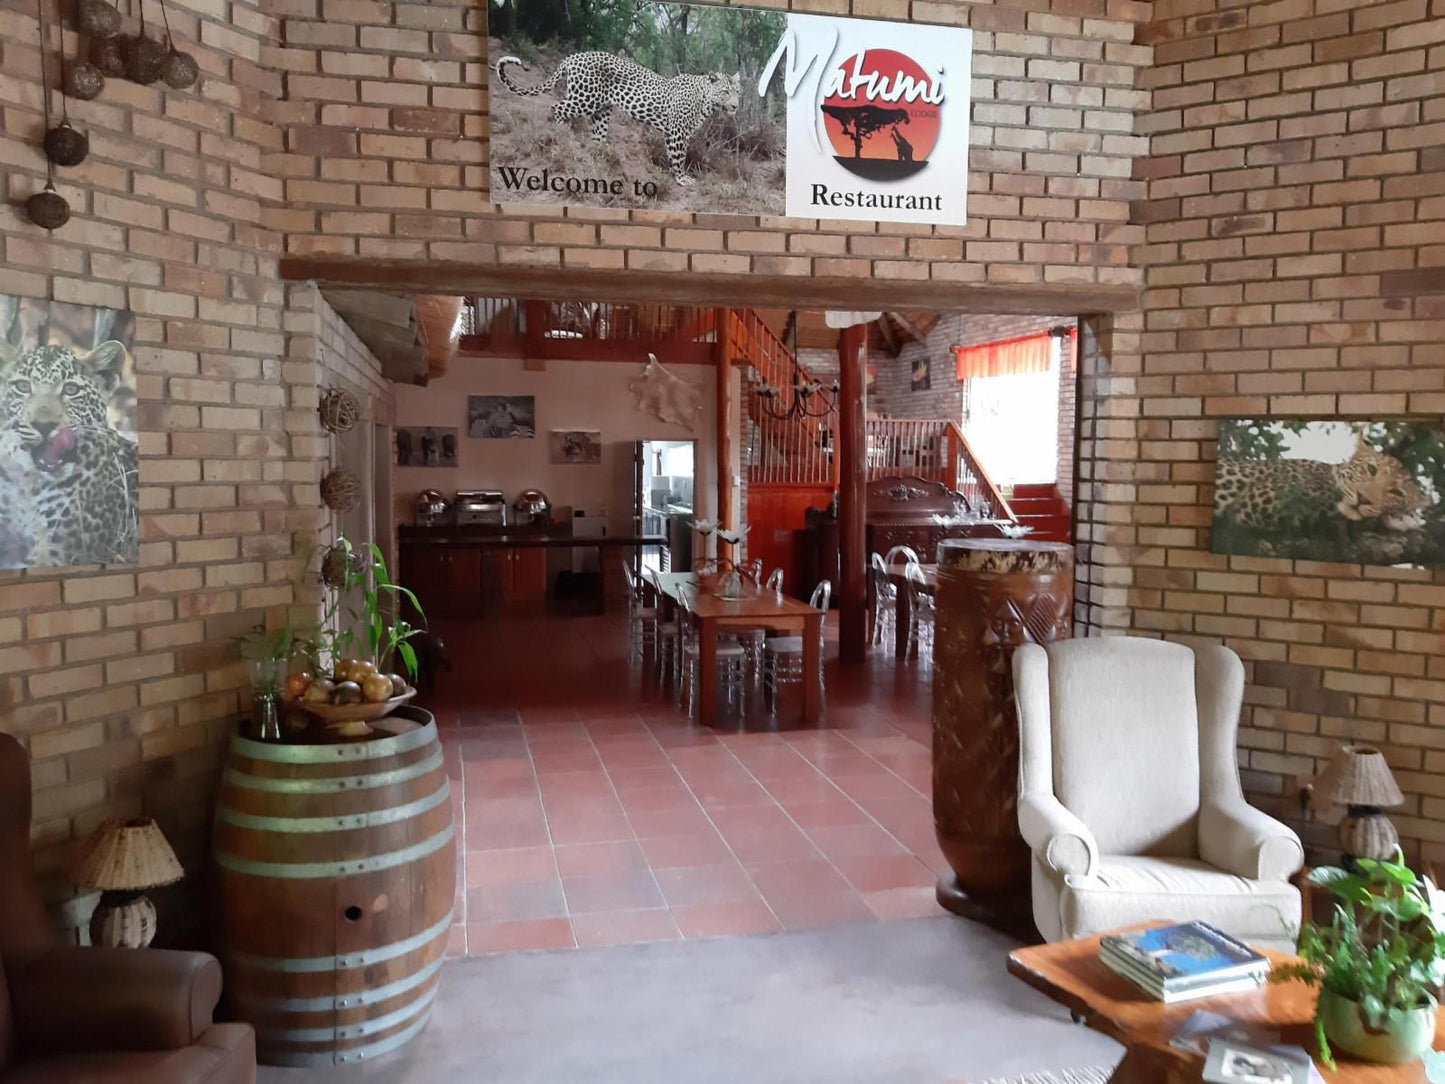 Matumi Lodge Klaserie Limpopo Province South Africa Bar